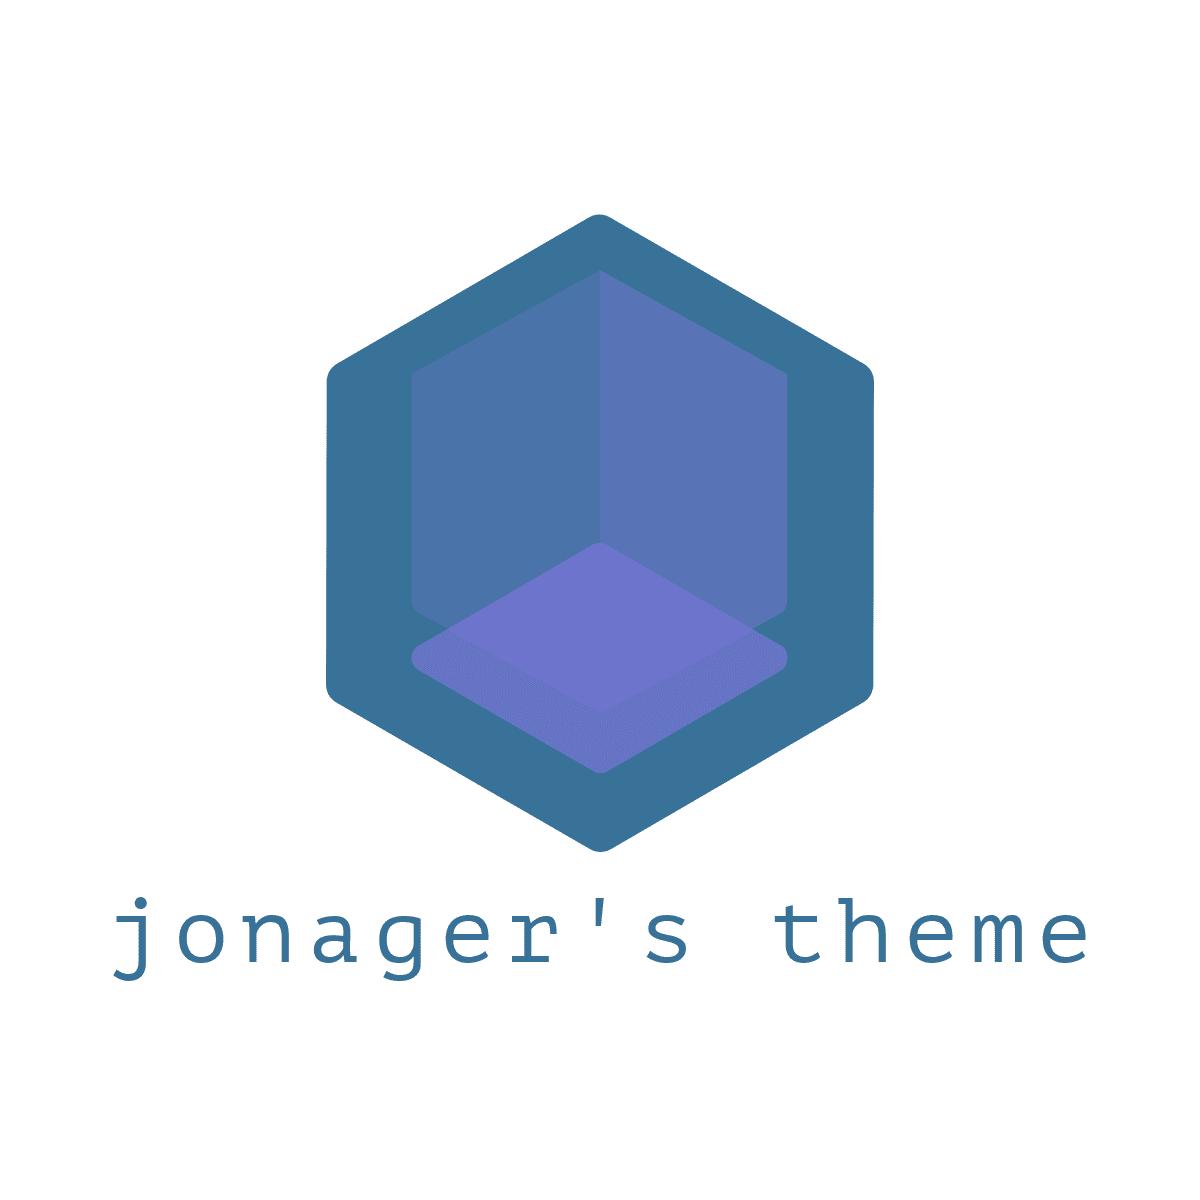 Jonager's theme